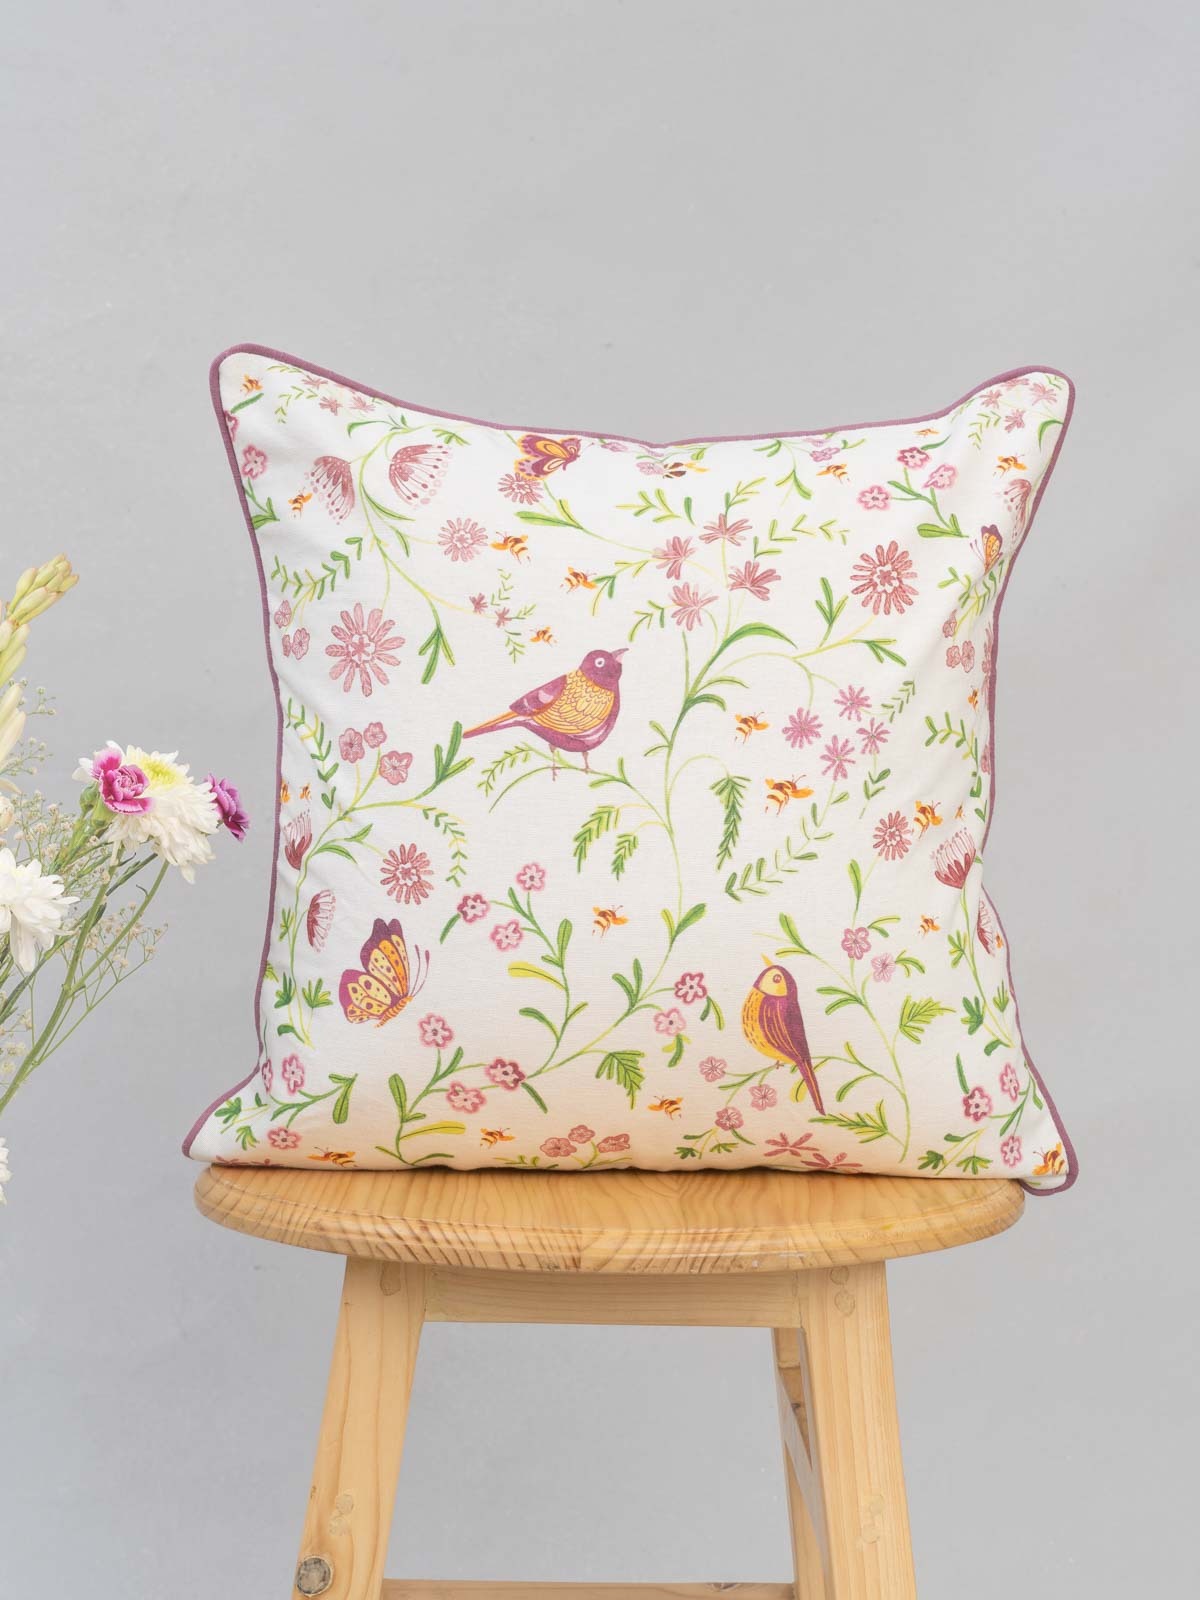 Whimsical Garden Printed Cotton Cushion Cover - Multicolor